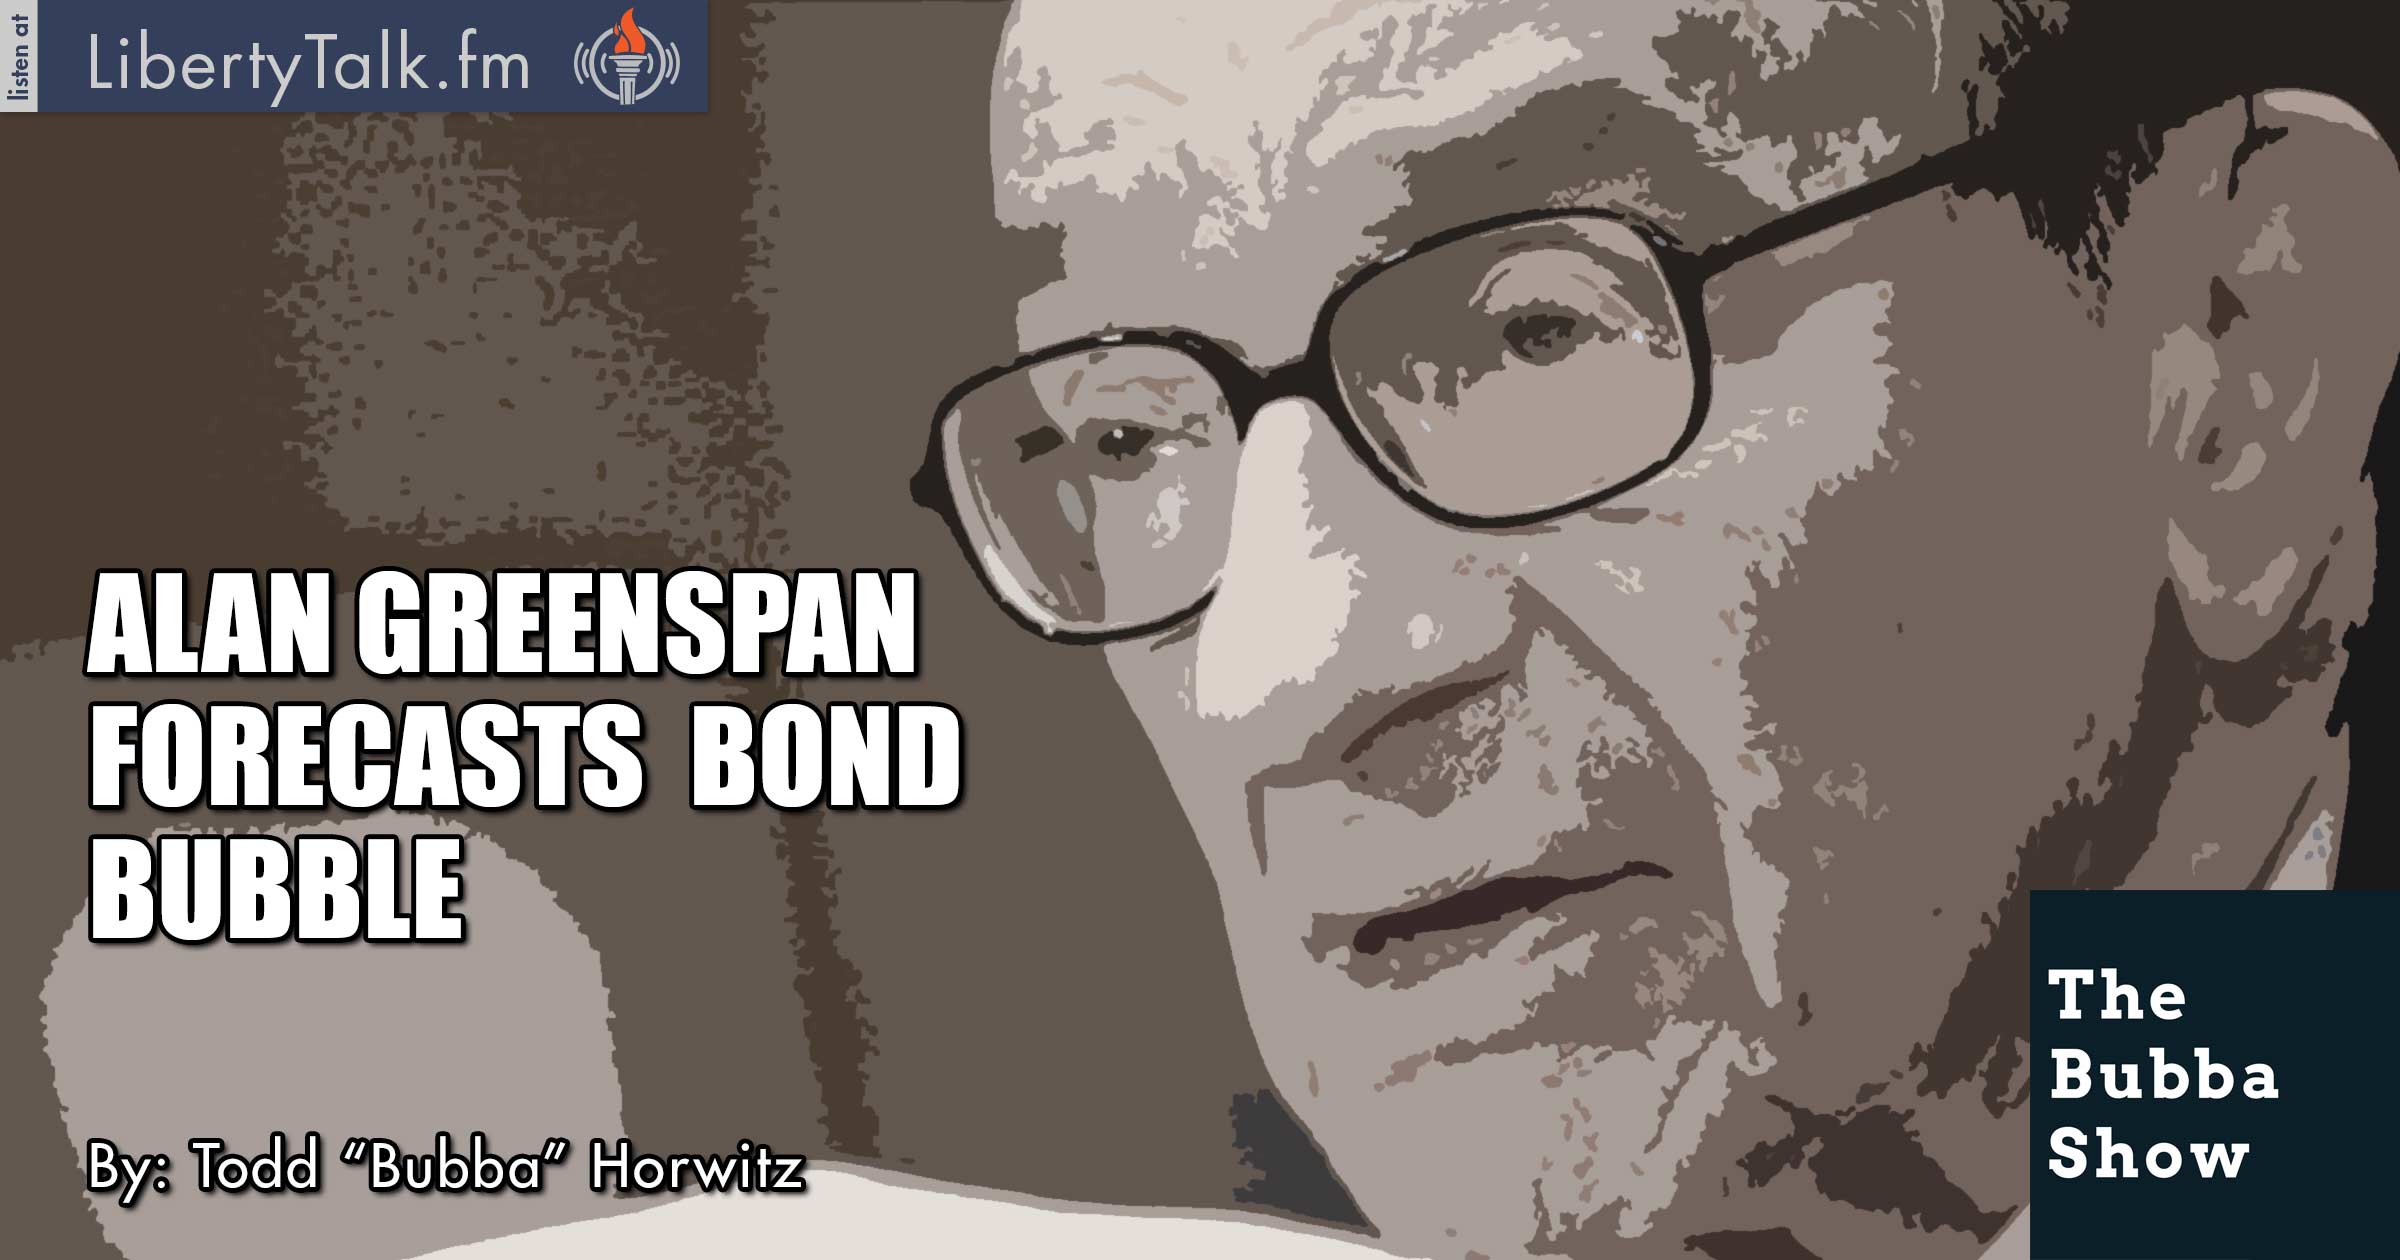 Alan Greenspan Forecasts a Bond Bubble - Bubba Show